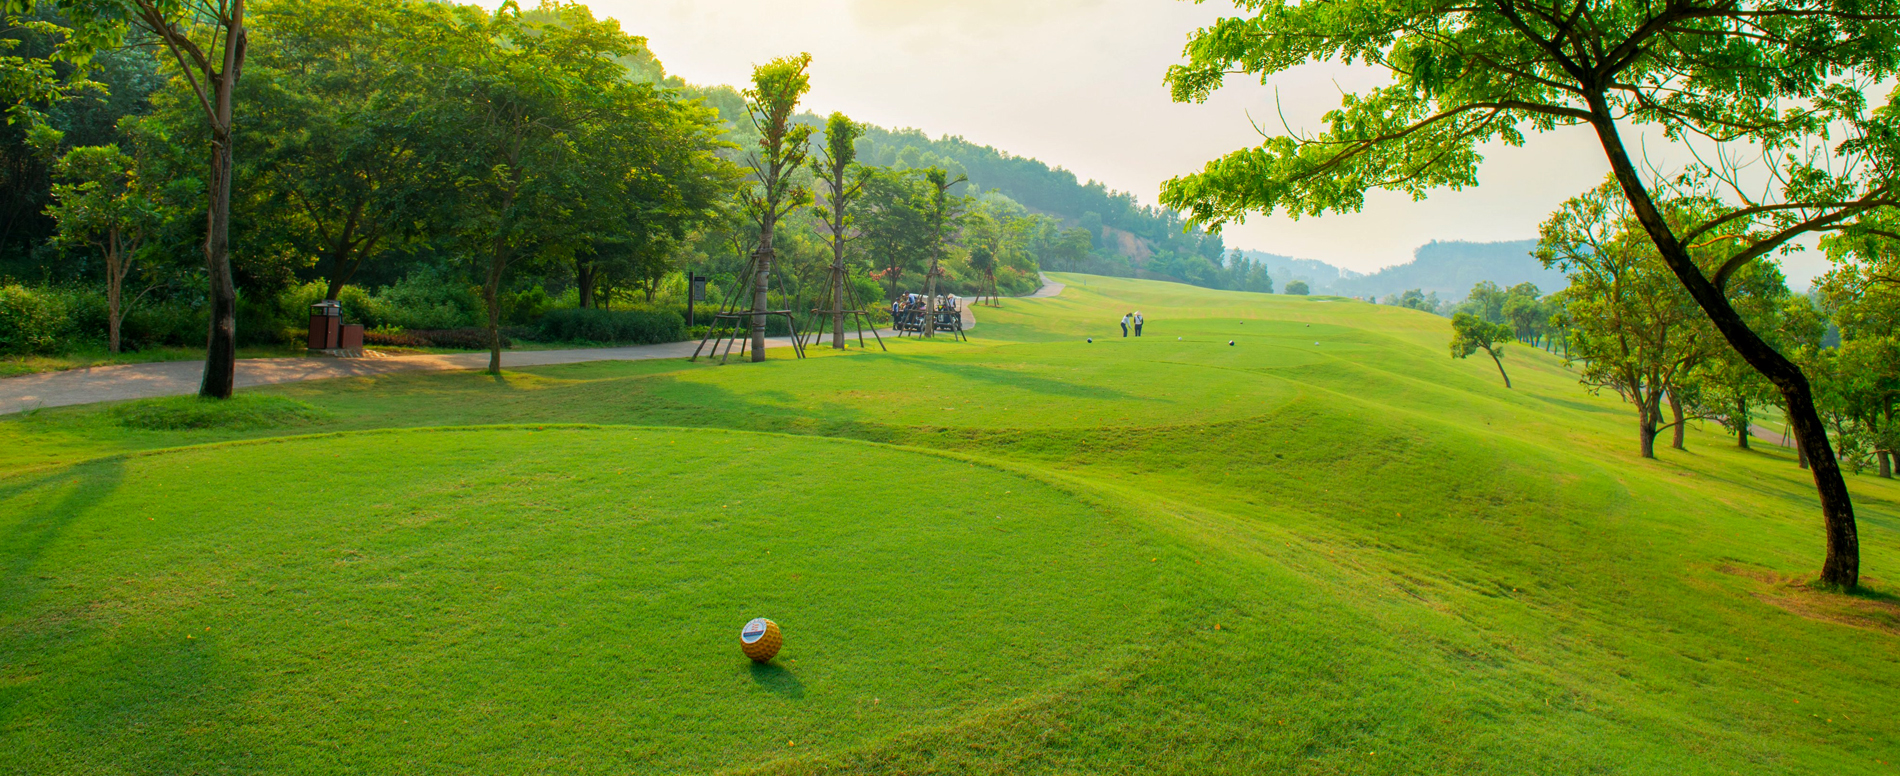 amber hills golf courses vietnam